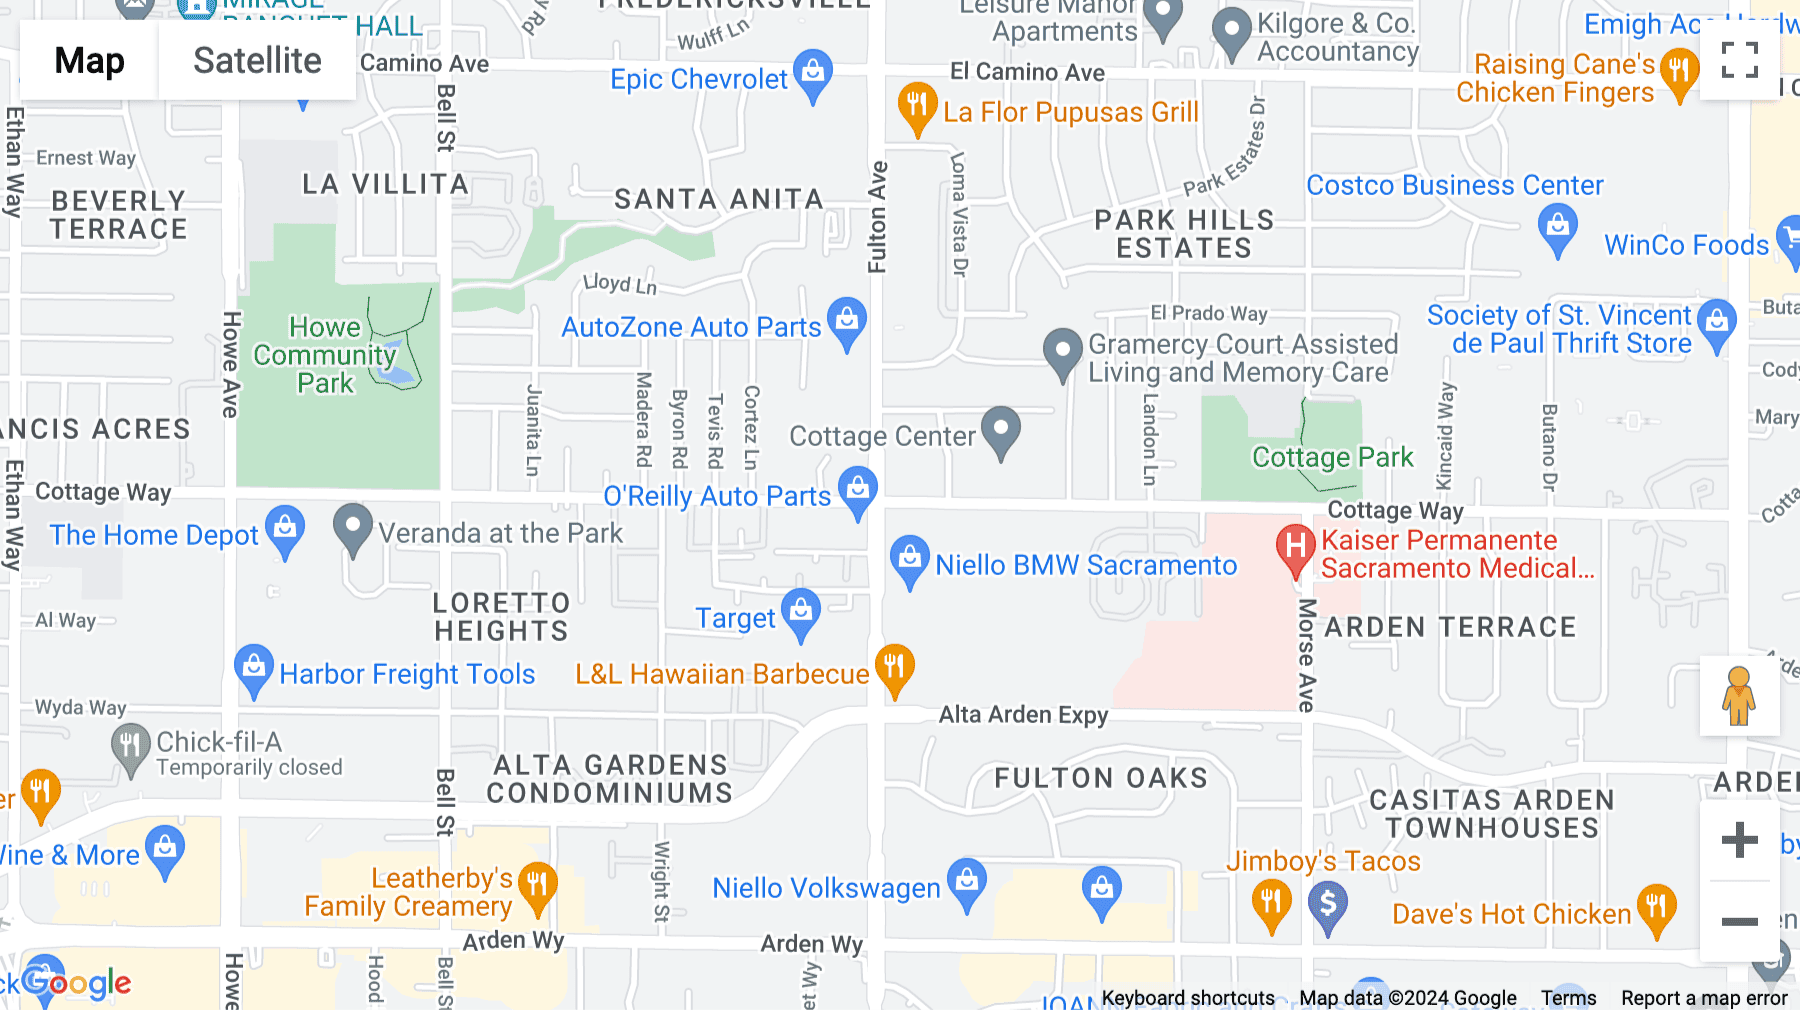 Click for interative map of 2740 Fulton Ave., Sacramento